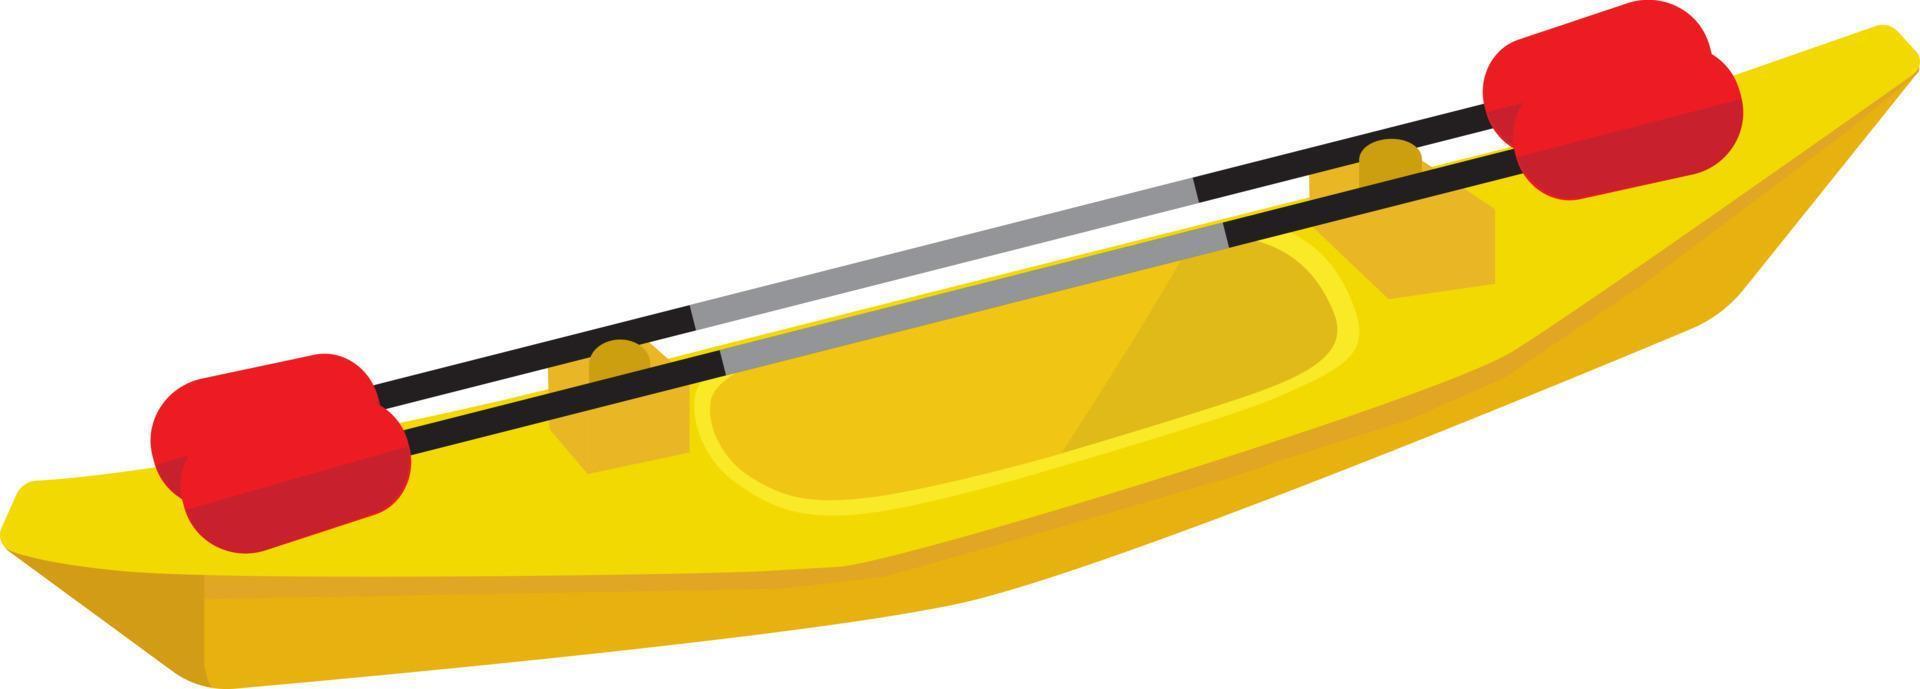 Kayak vector illustration for design